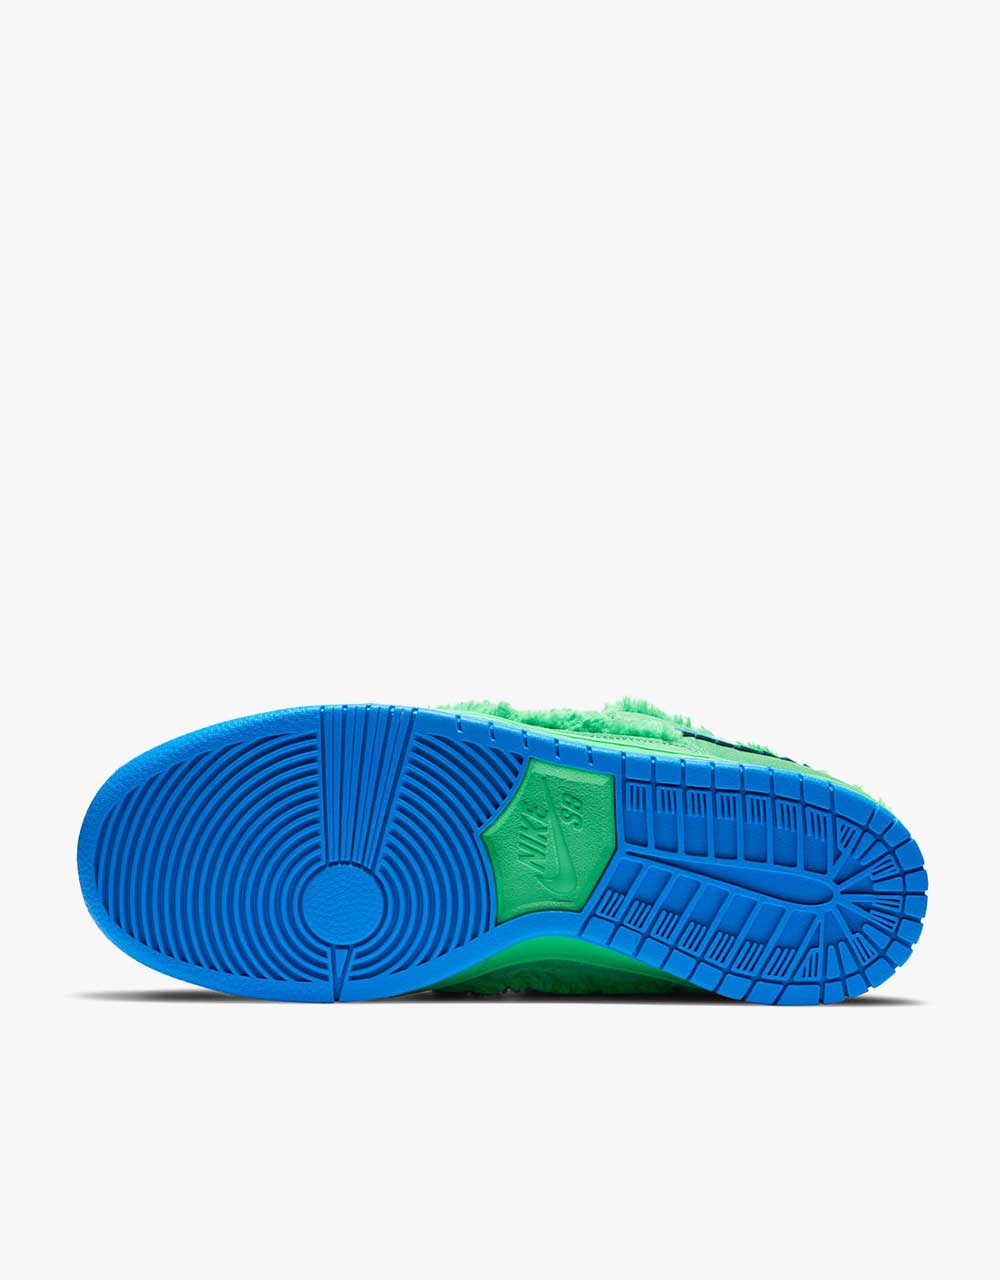 Nike SB Dunk Low Pro QS Skate Shoes - Green Spark/Soar